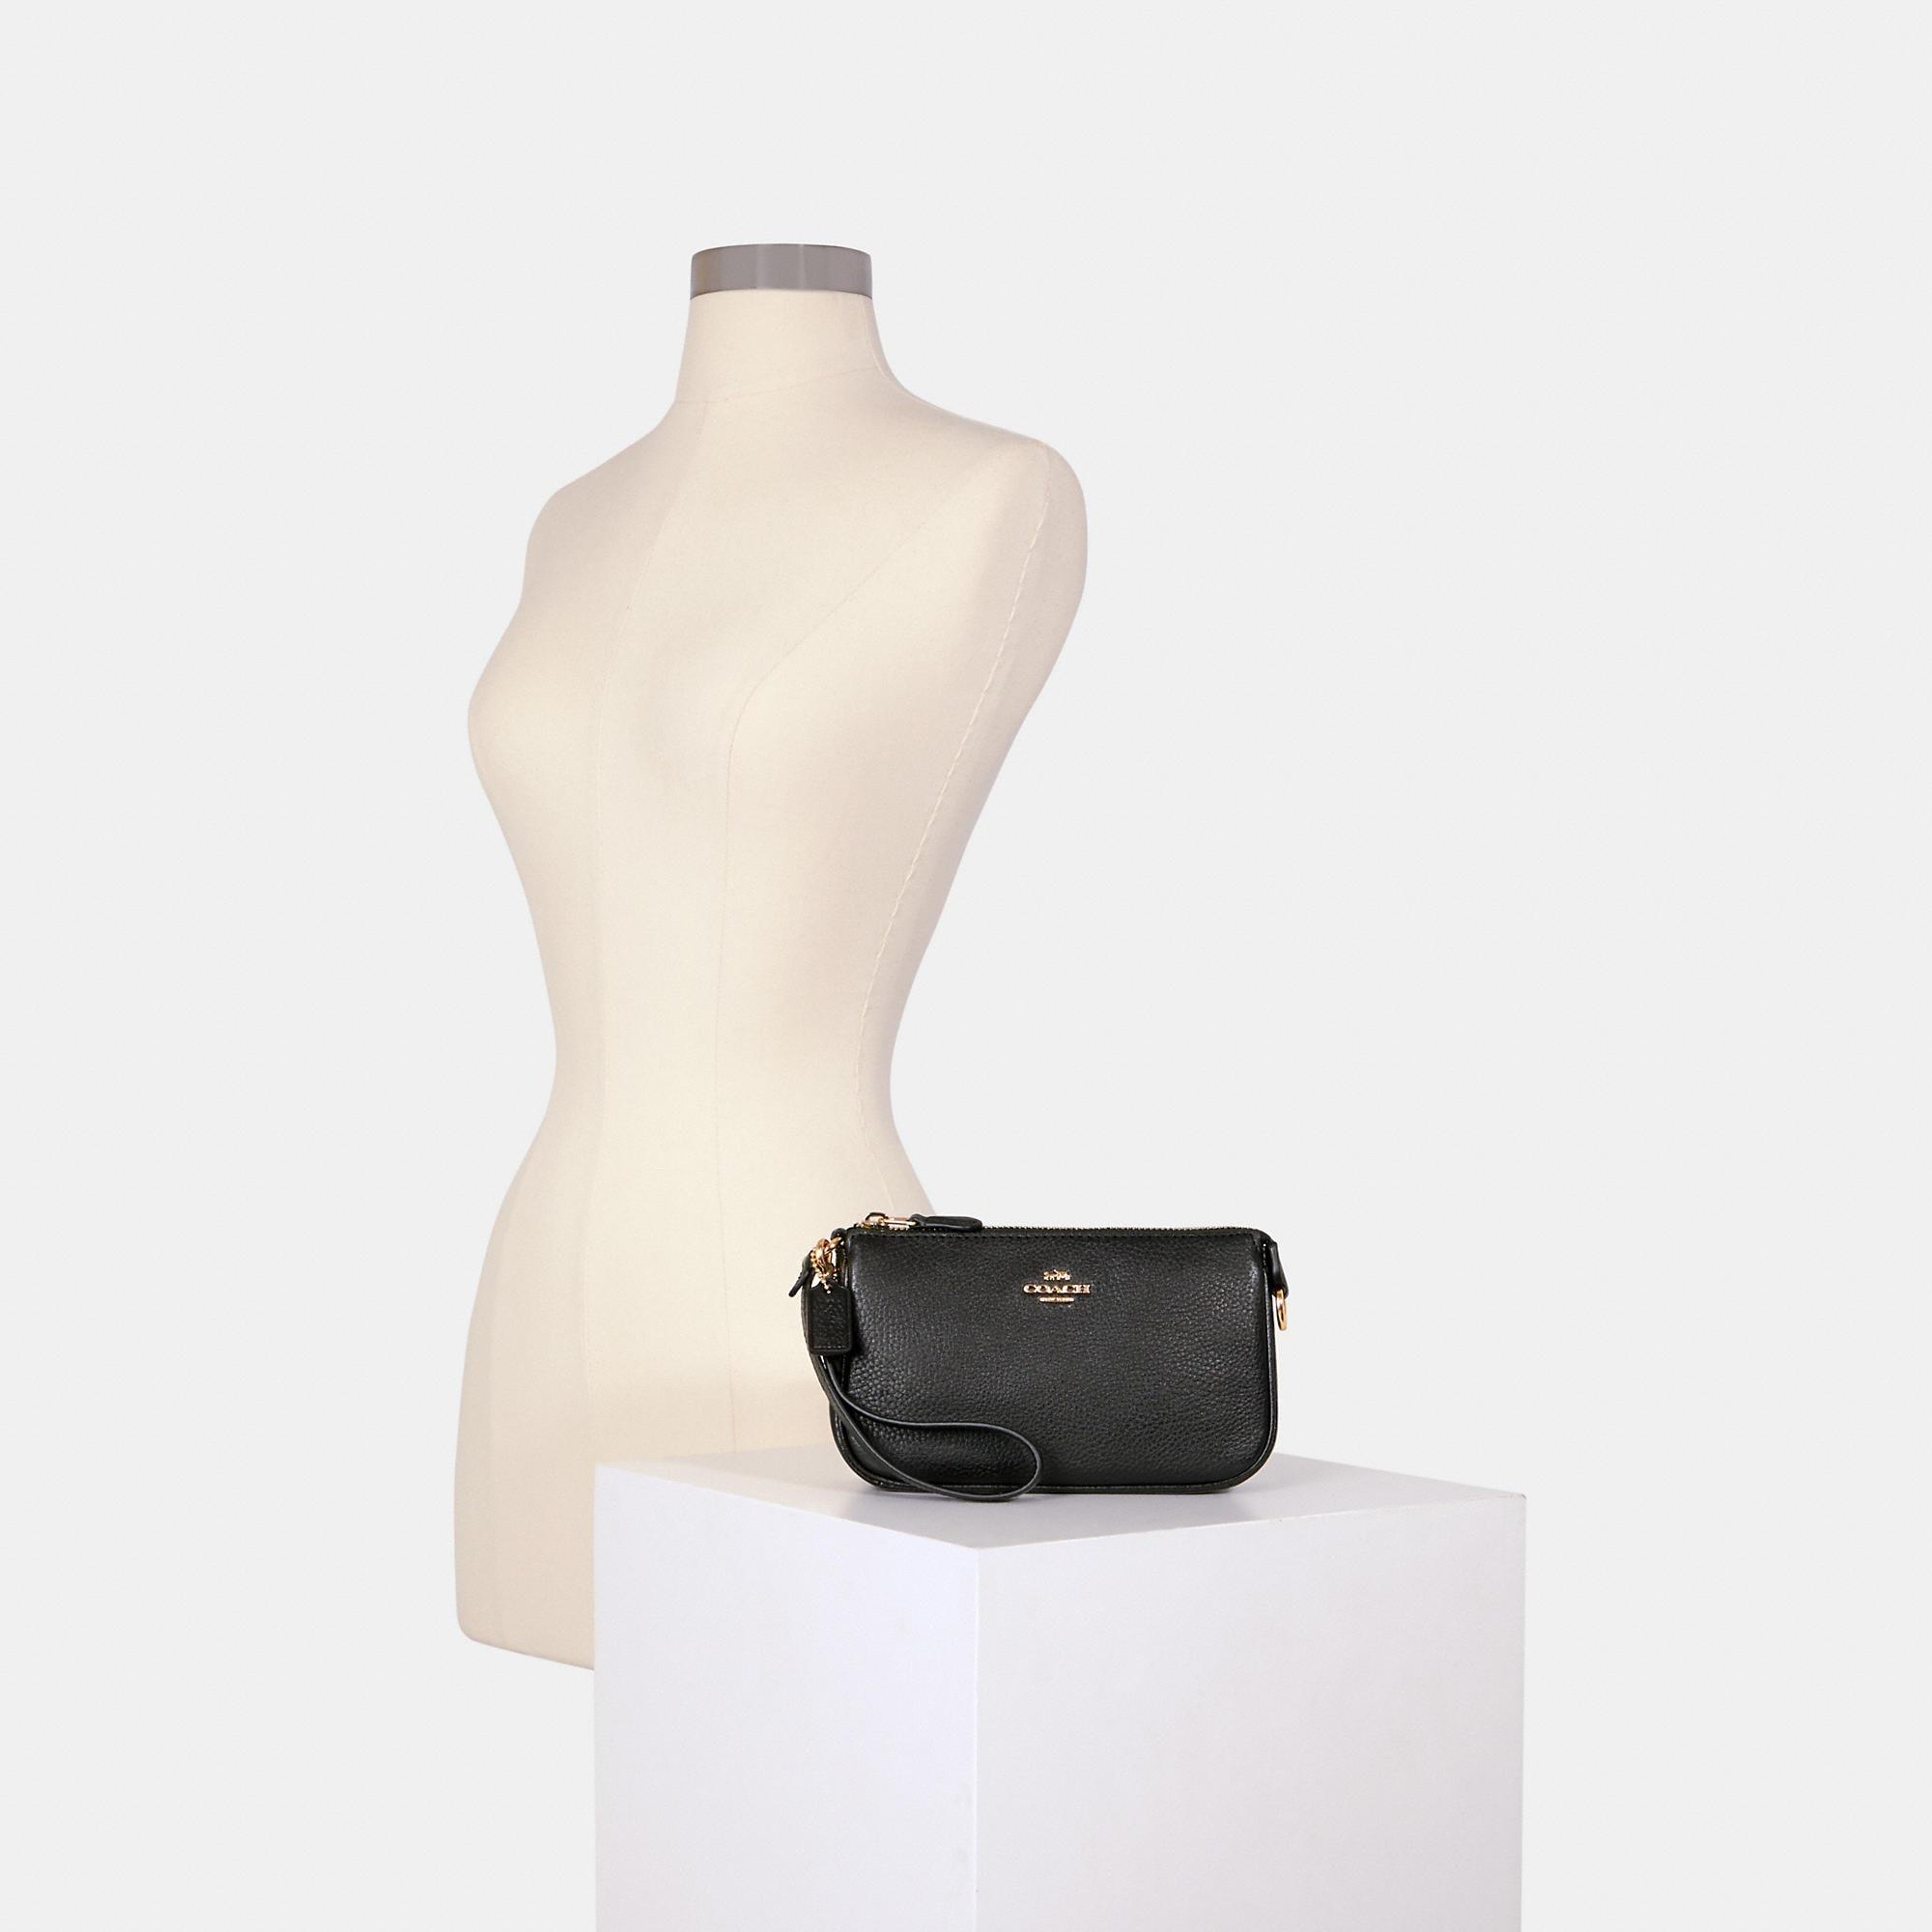 Wristlet nolita 19 leather mini bag Coach Black in Leather - 35822039